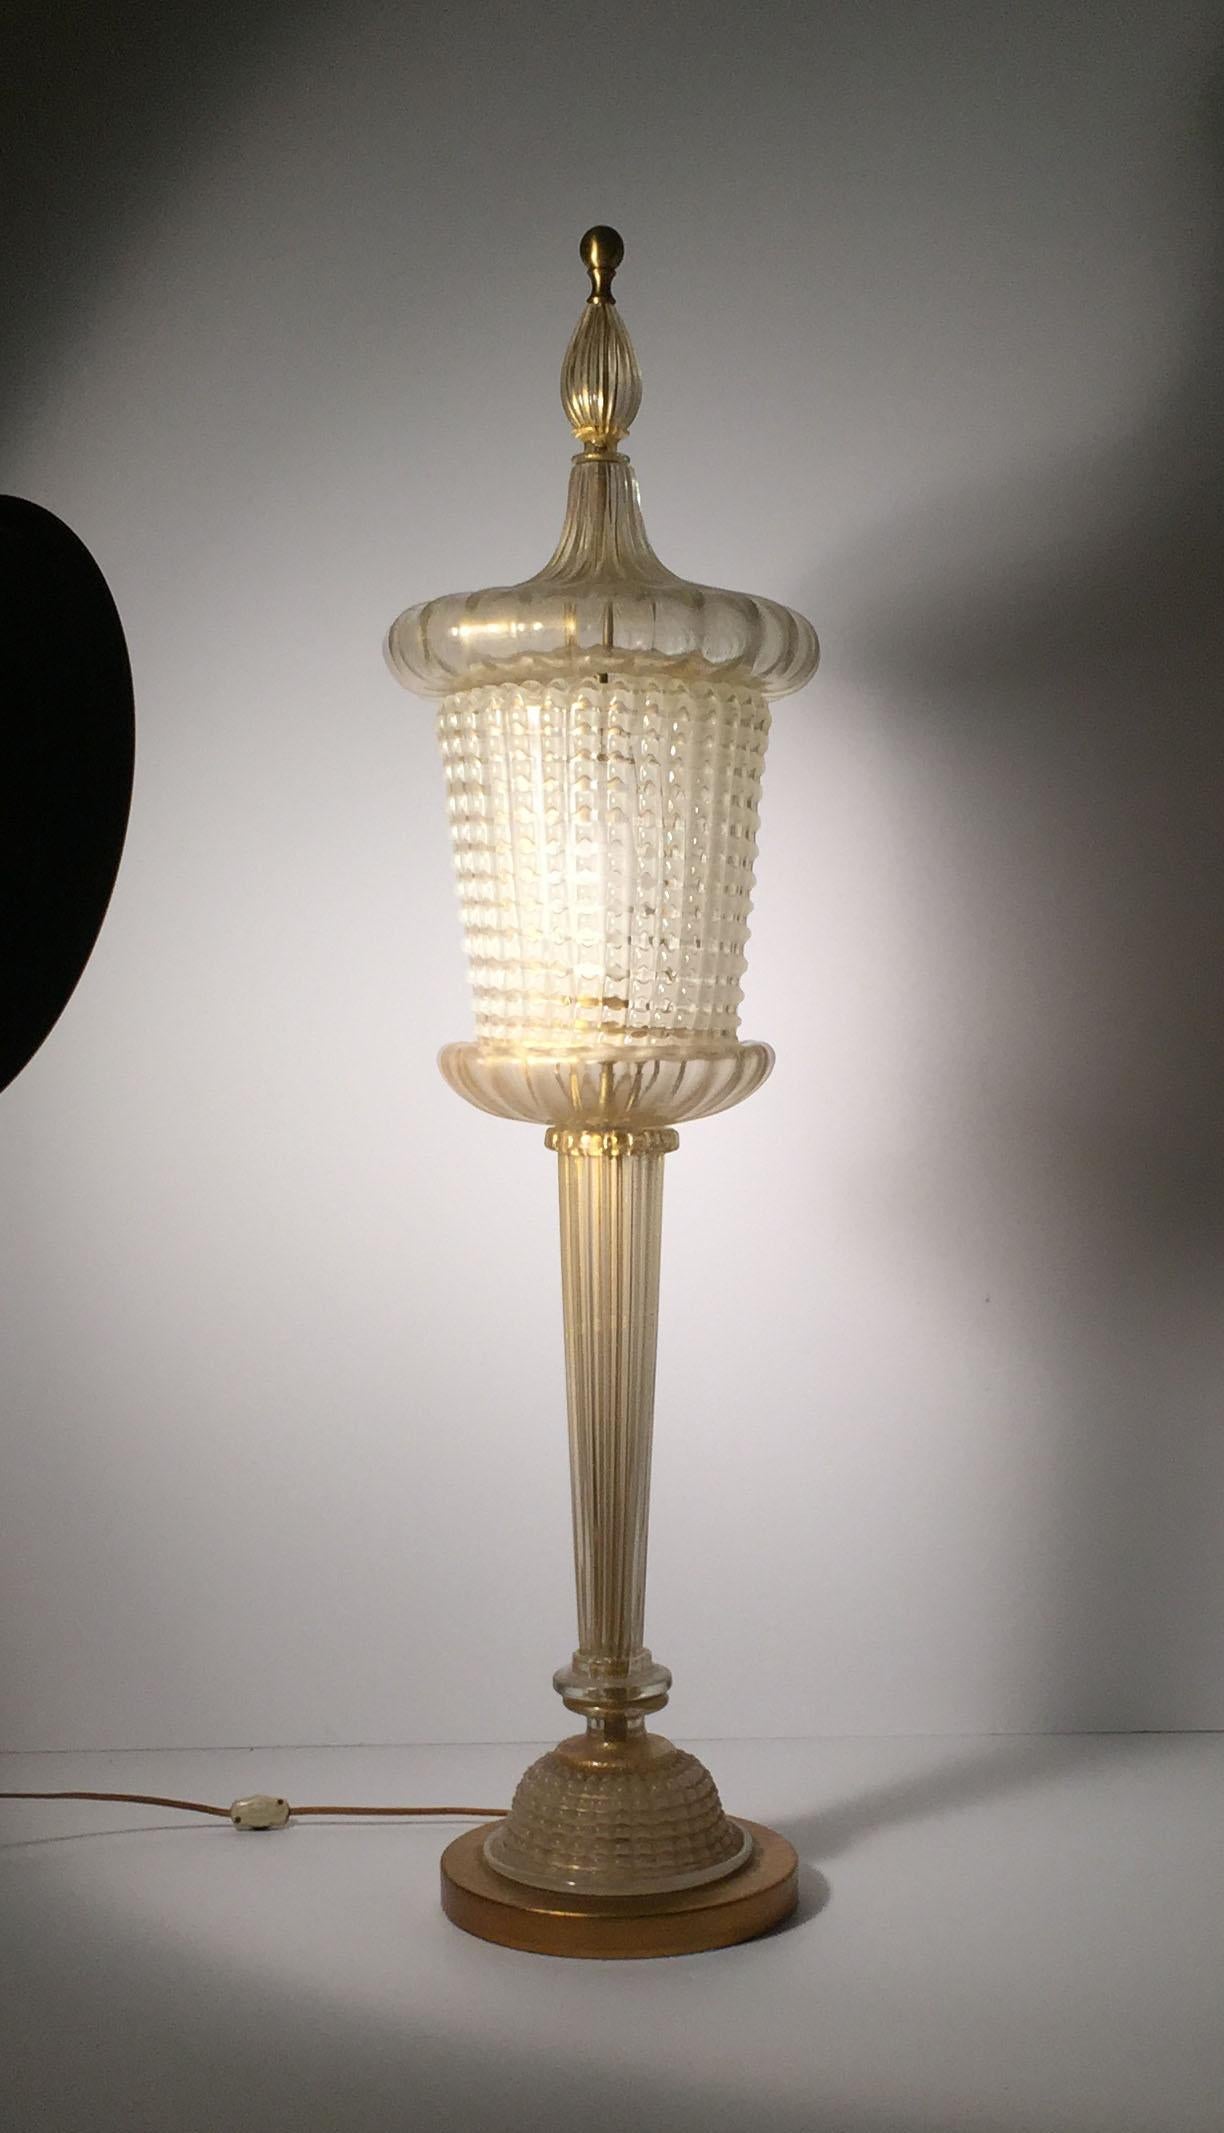 Lampe de table en verre Barovier en forme de lanterne.

Hollywood Regency, design moderne.